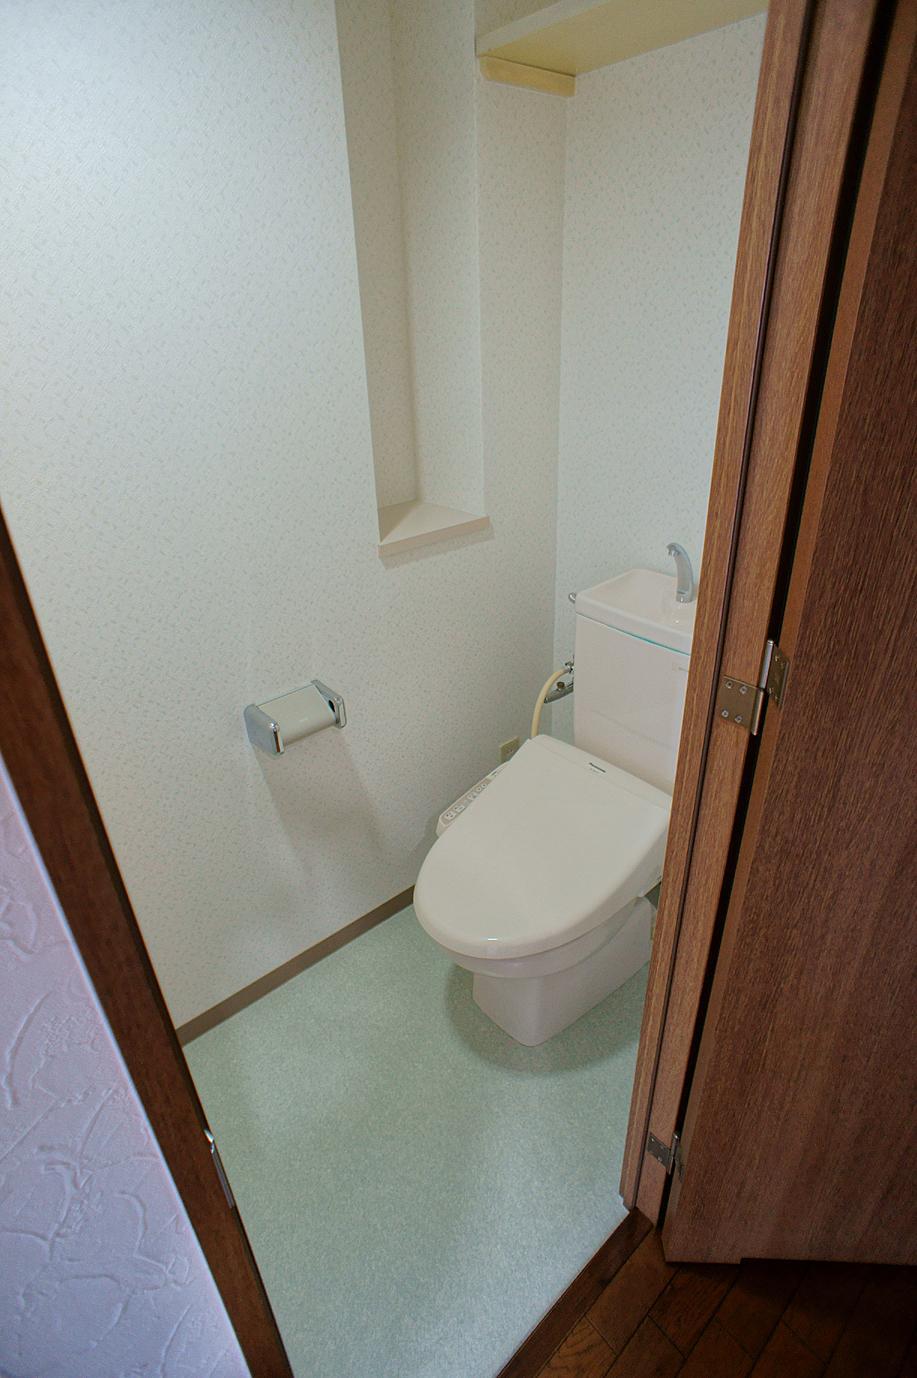 Toilet. July 2012 shooting